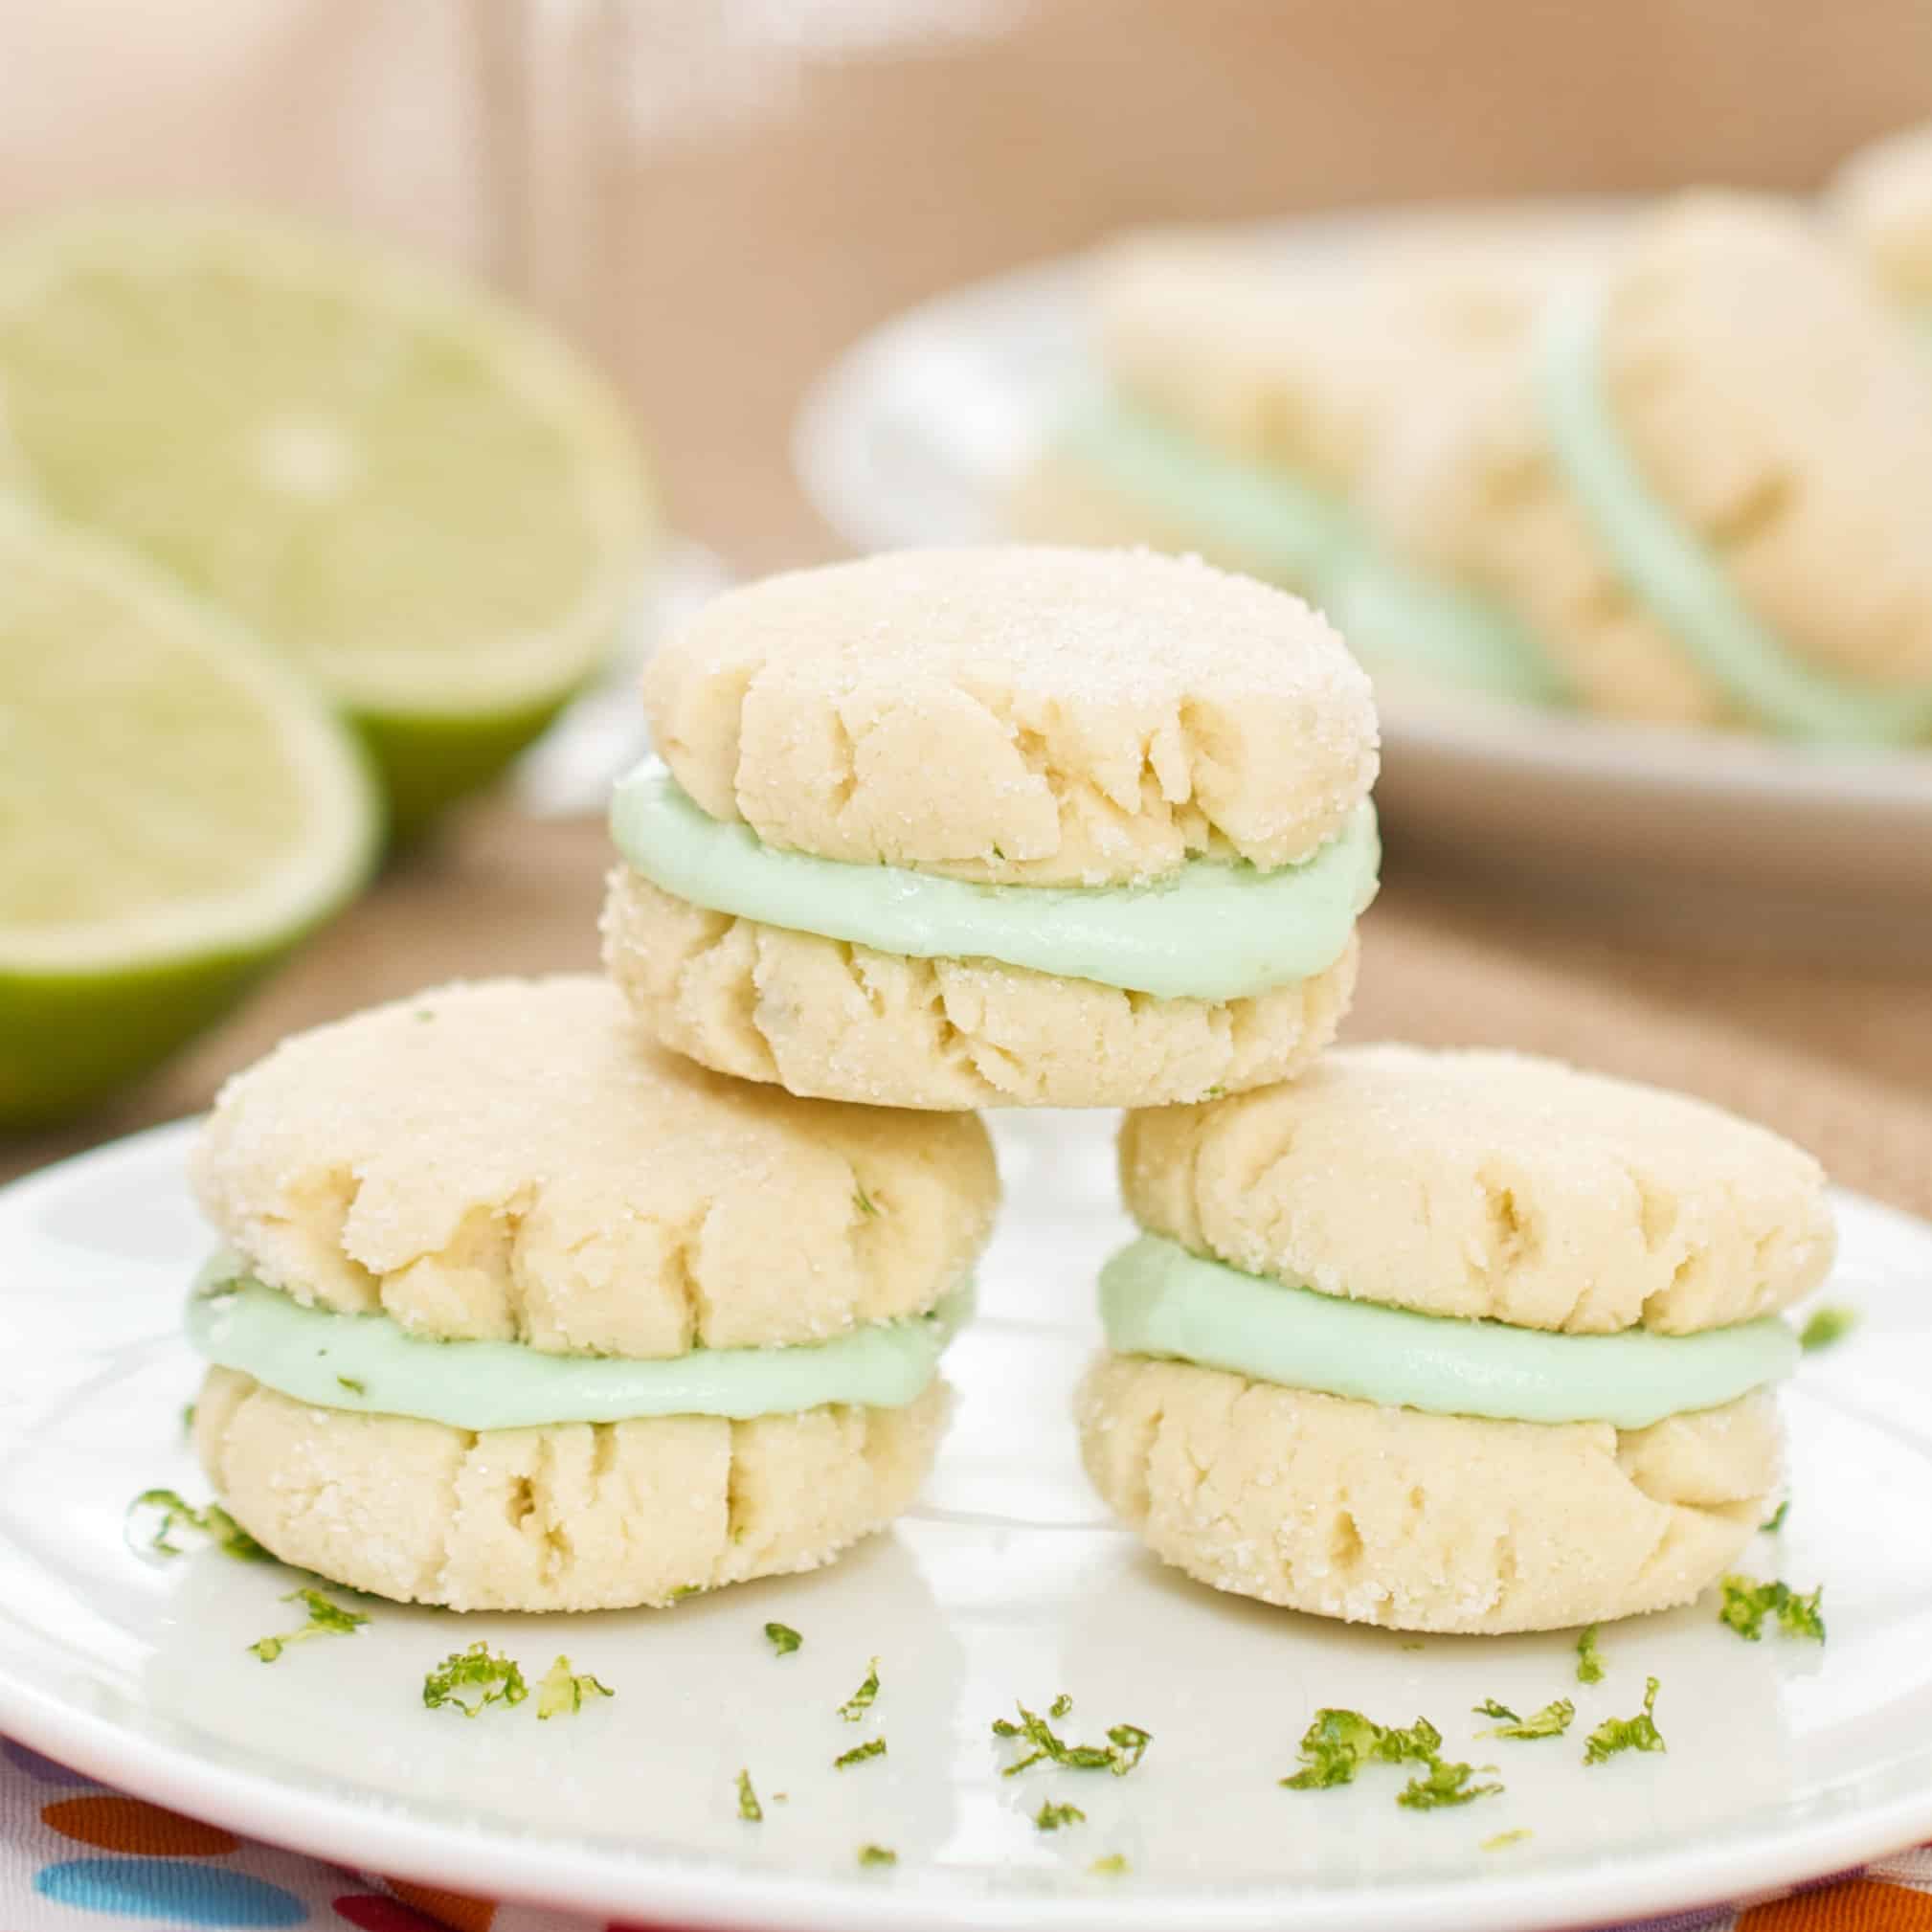 Margarita Ice-Cream Sandwiches – First Look, Then Cook